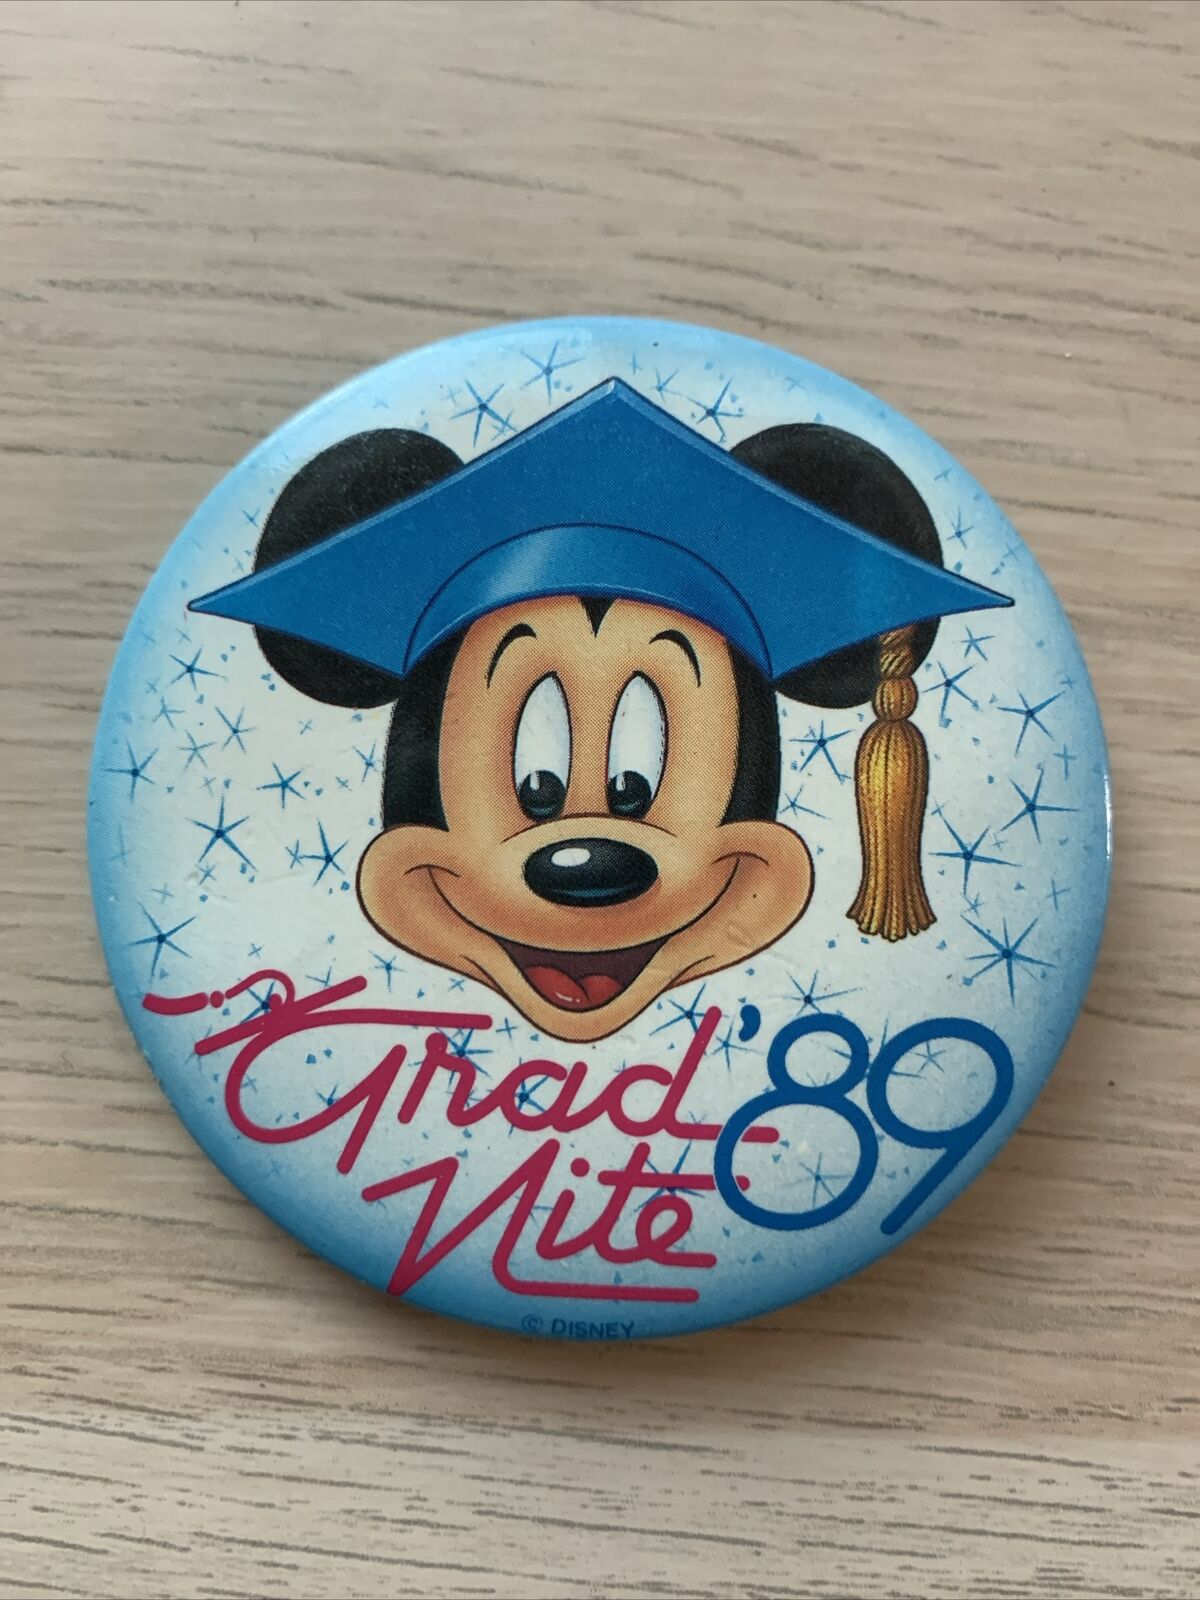 Disneyland Grad Night Pin Button 1989 Grad Nite